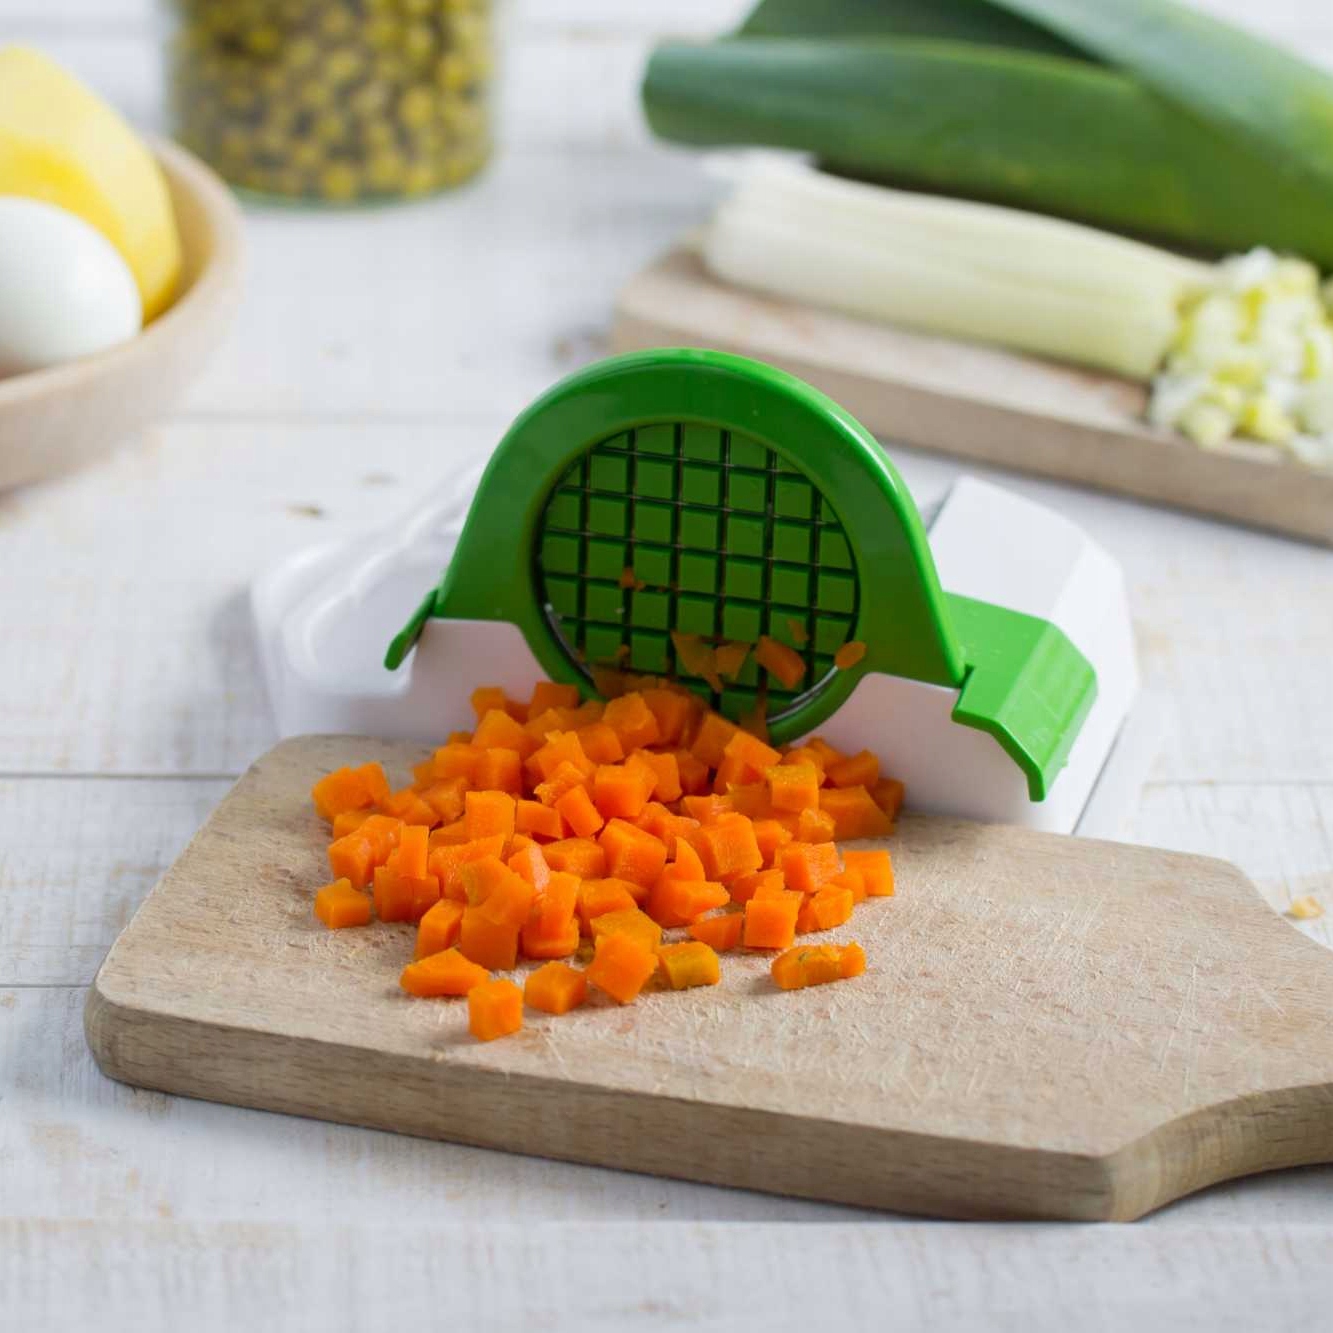 Резка овощей кубиками. Нарезка кубиками овощерезка. Нарезка овощей кубиками овощерезка. Нож для нарезки овощей кубиками. Овощерезка для салатов кубиками.